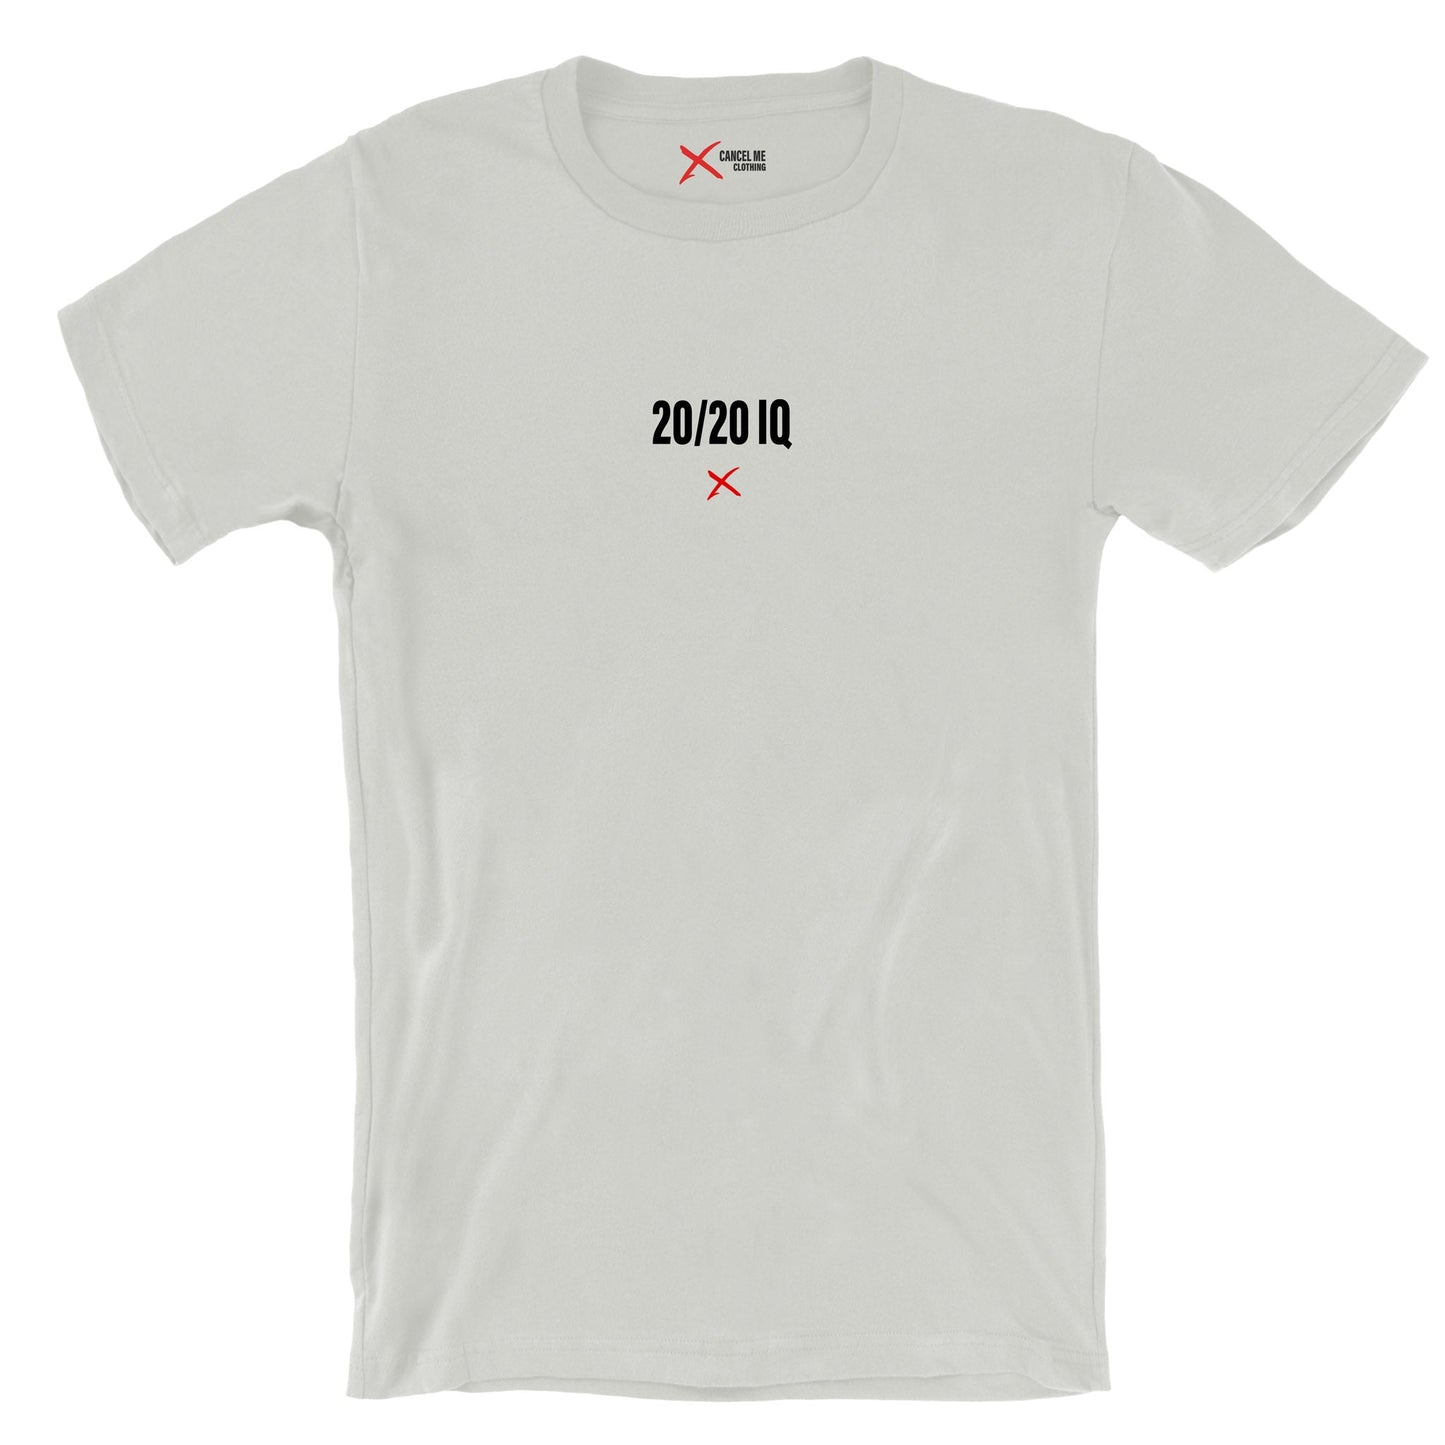 20/20 IQ - Shirt